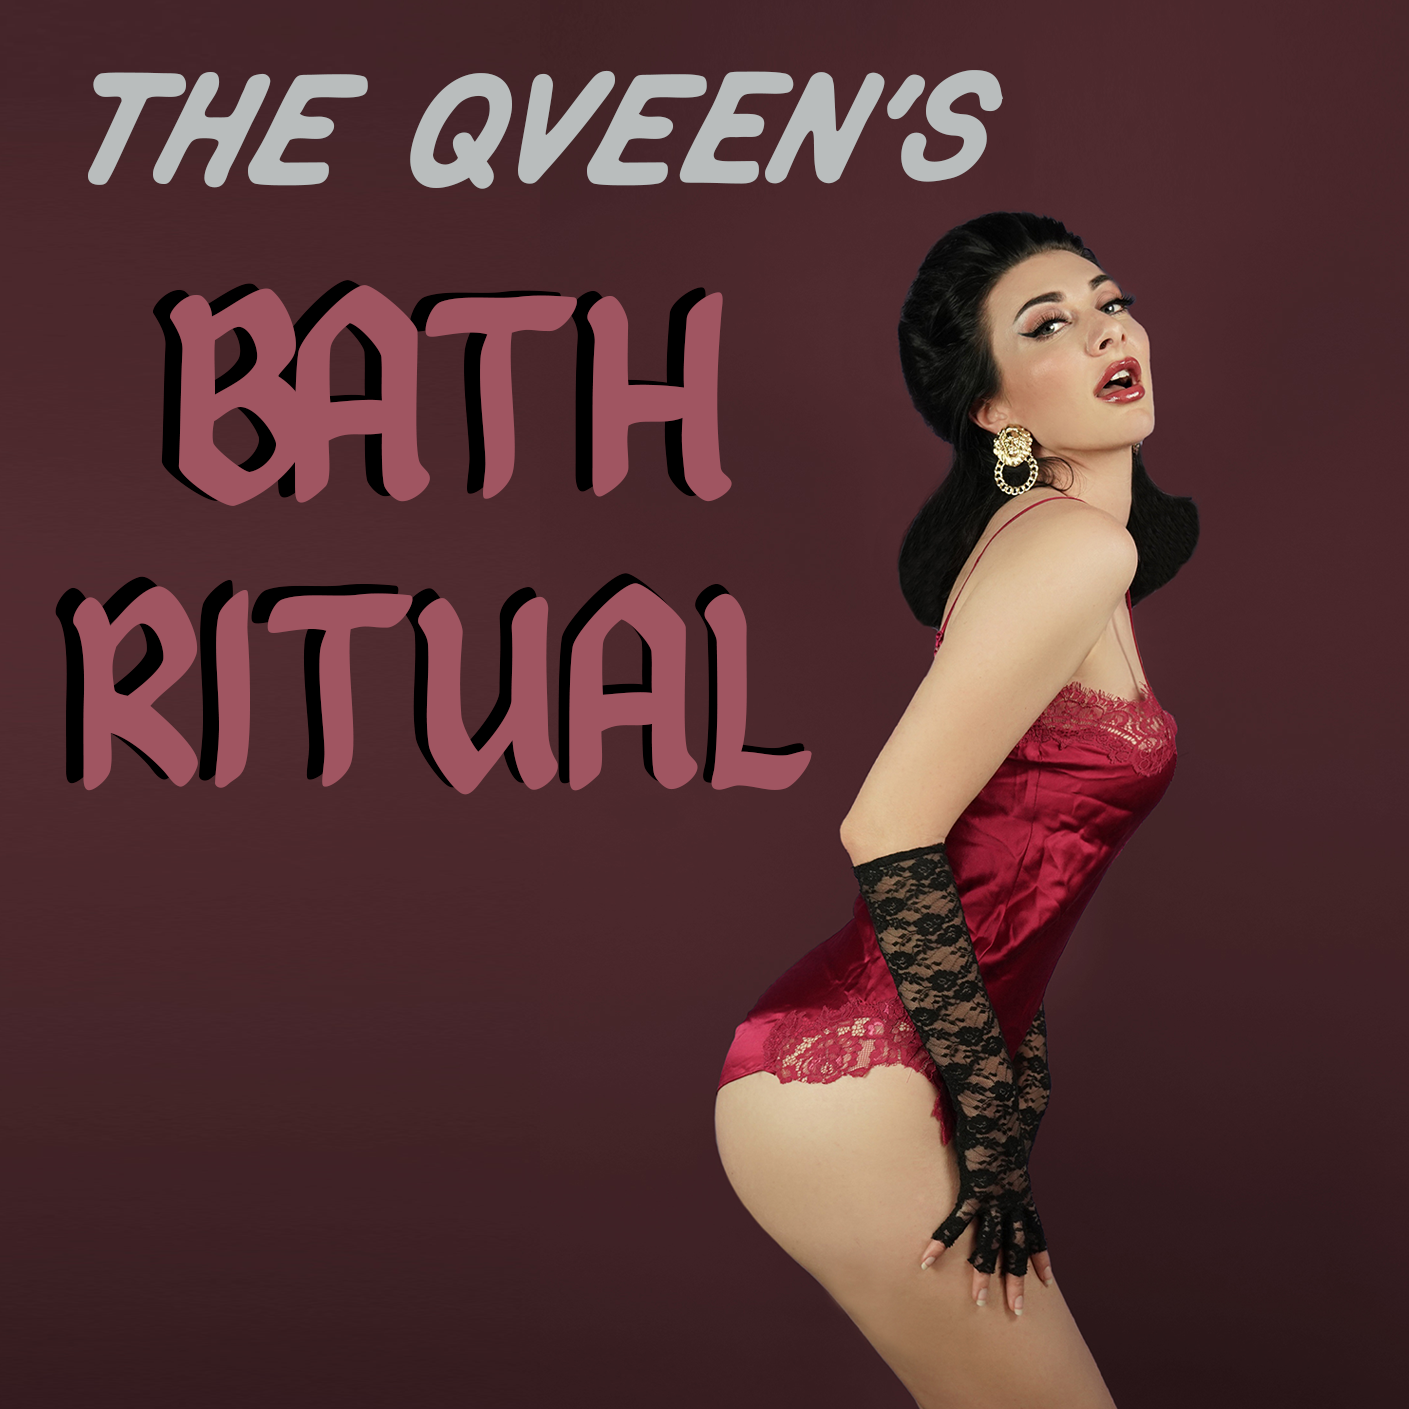 The Bath or Shower Ritual